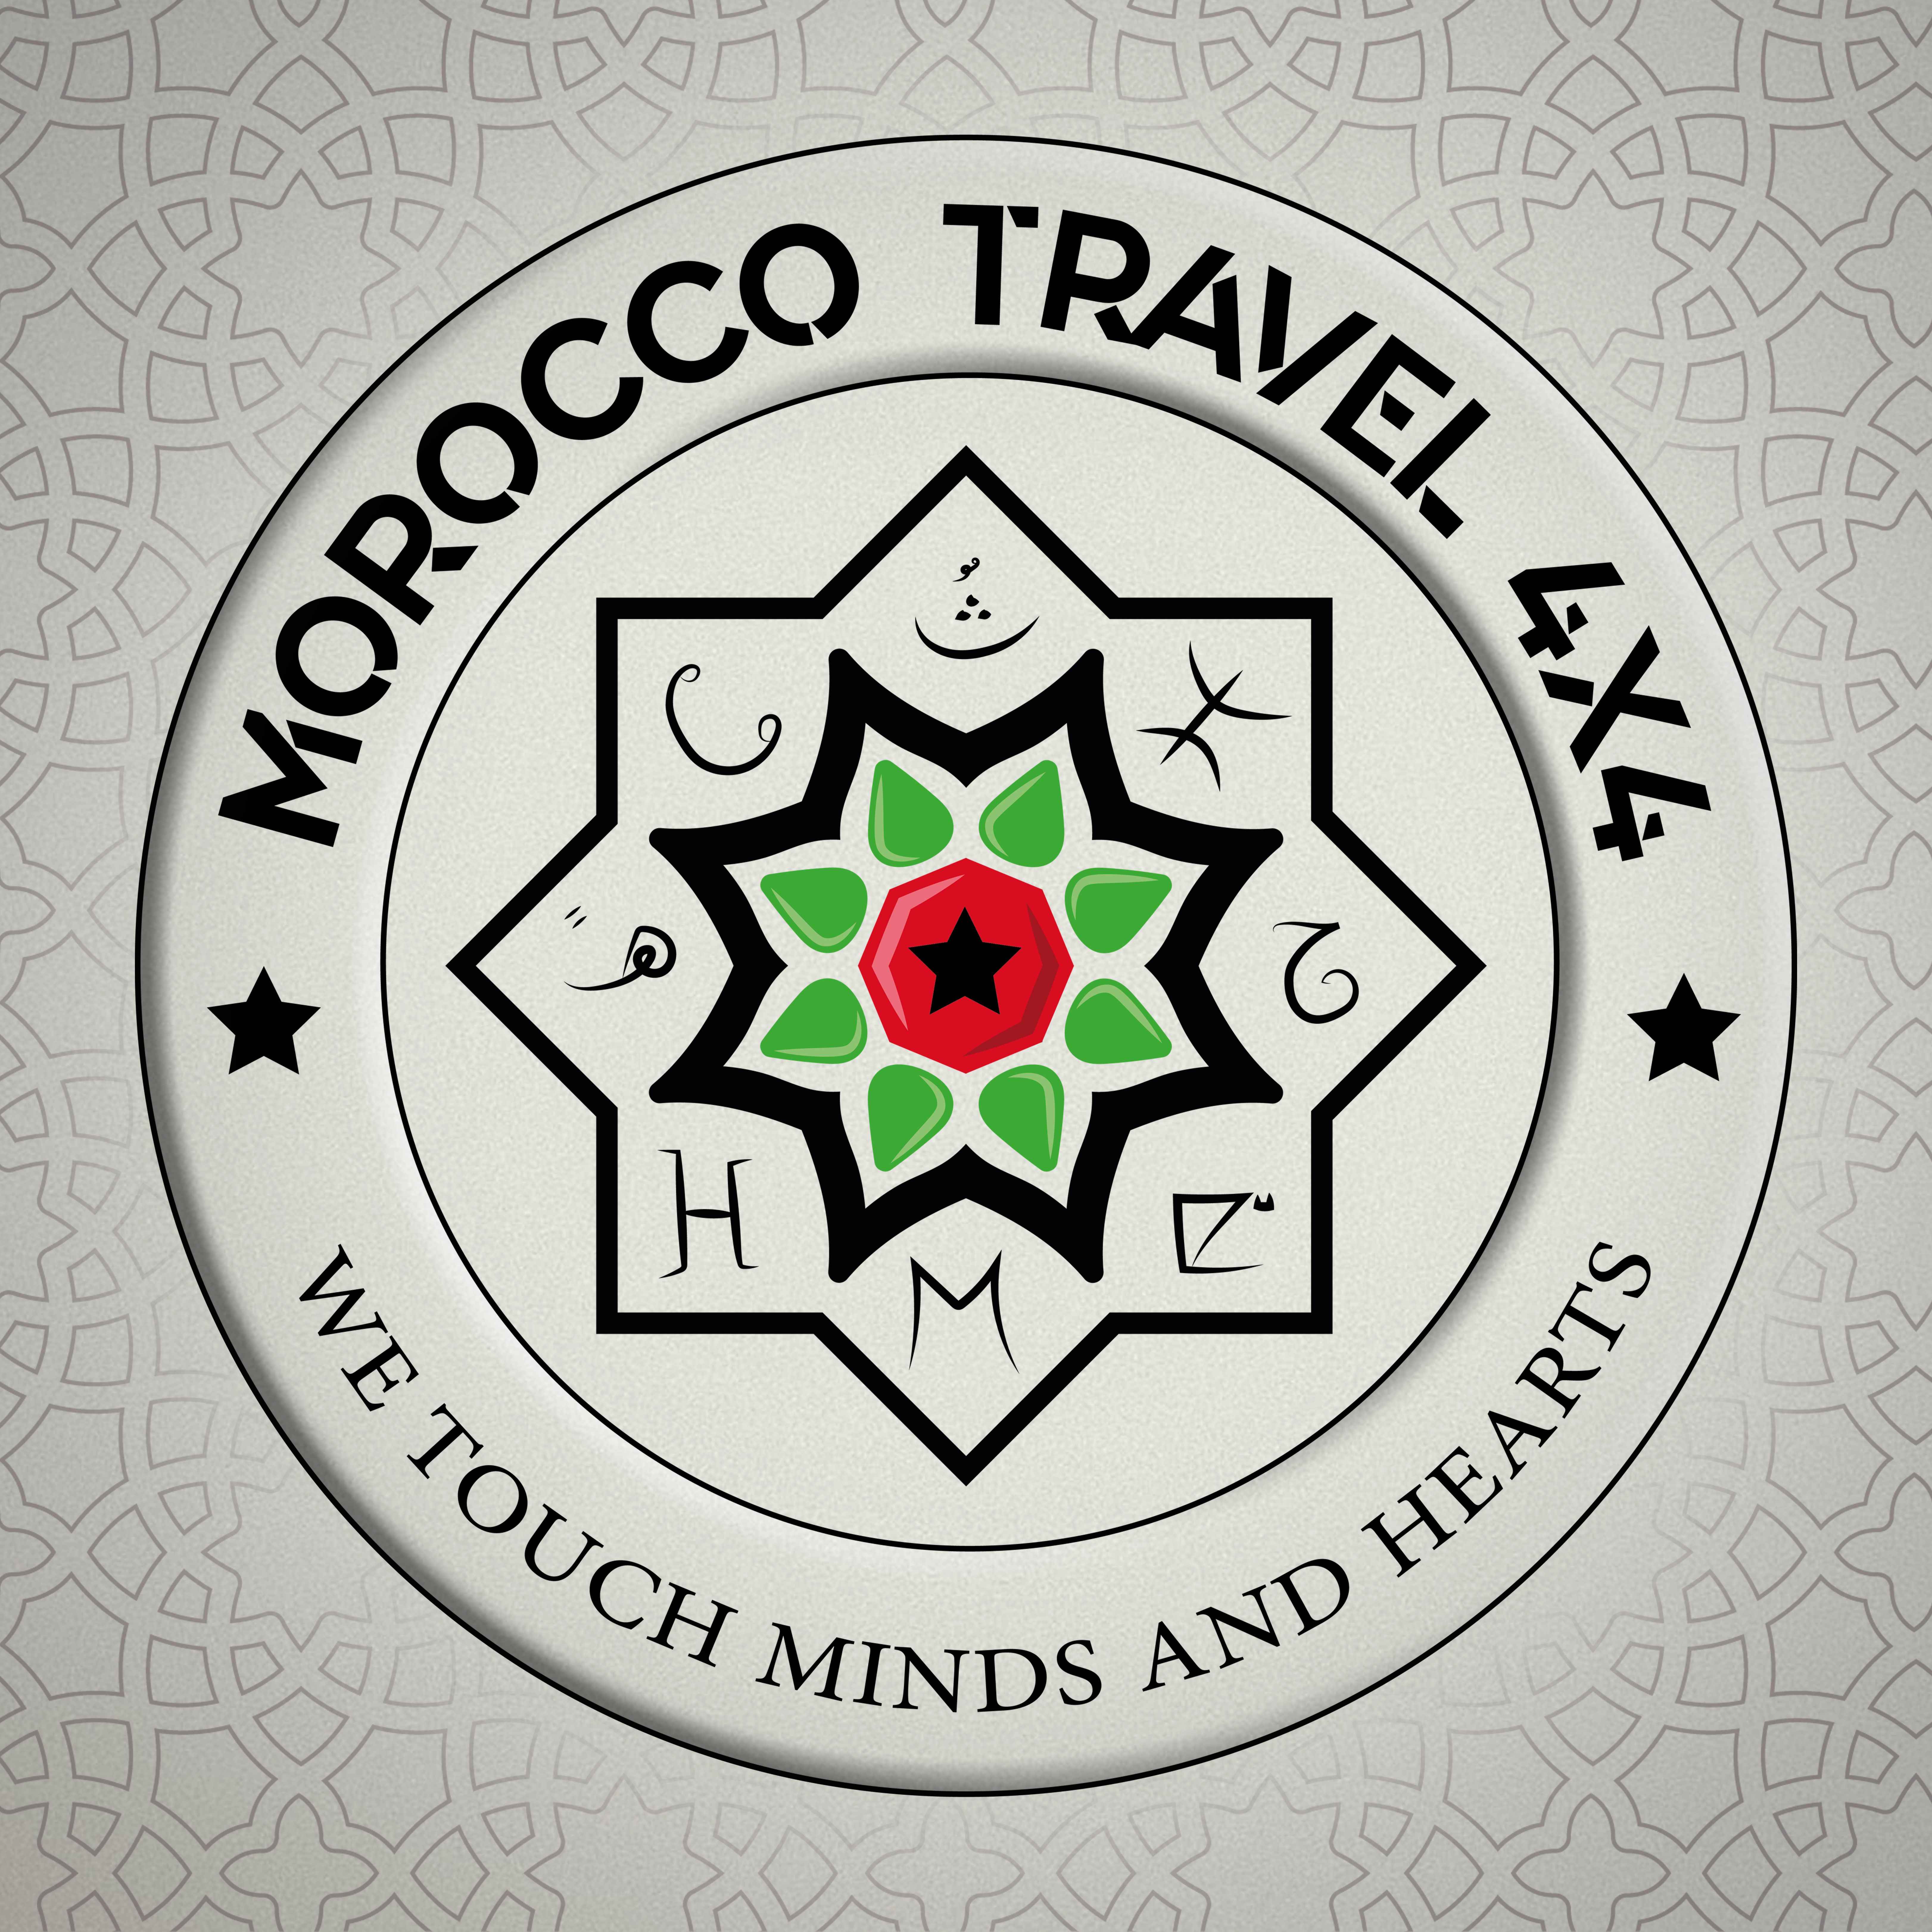 morocco-travel-4x4